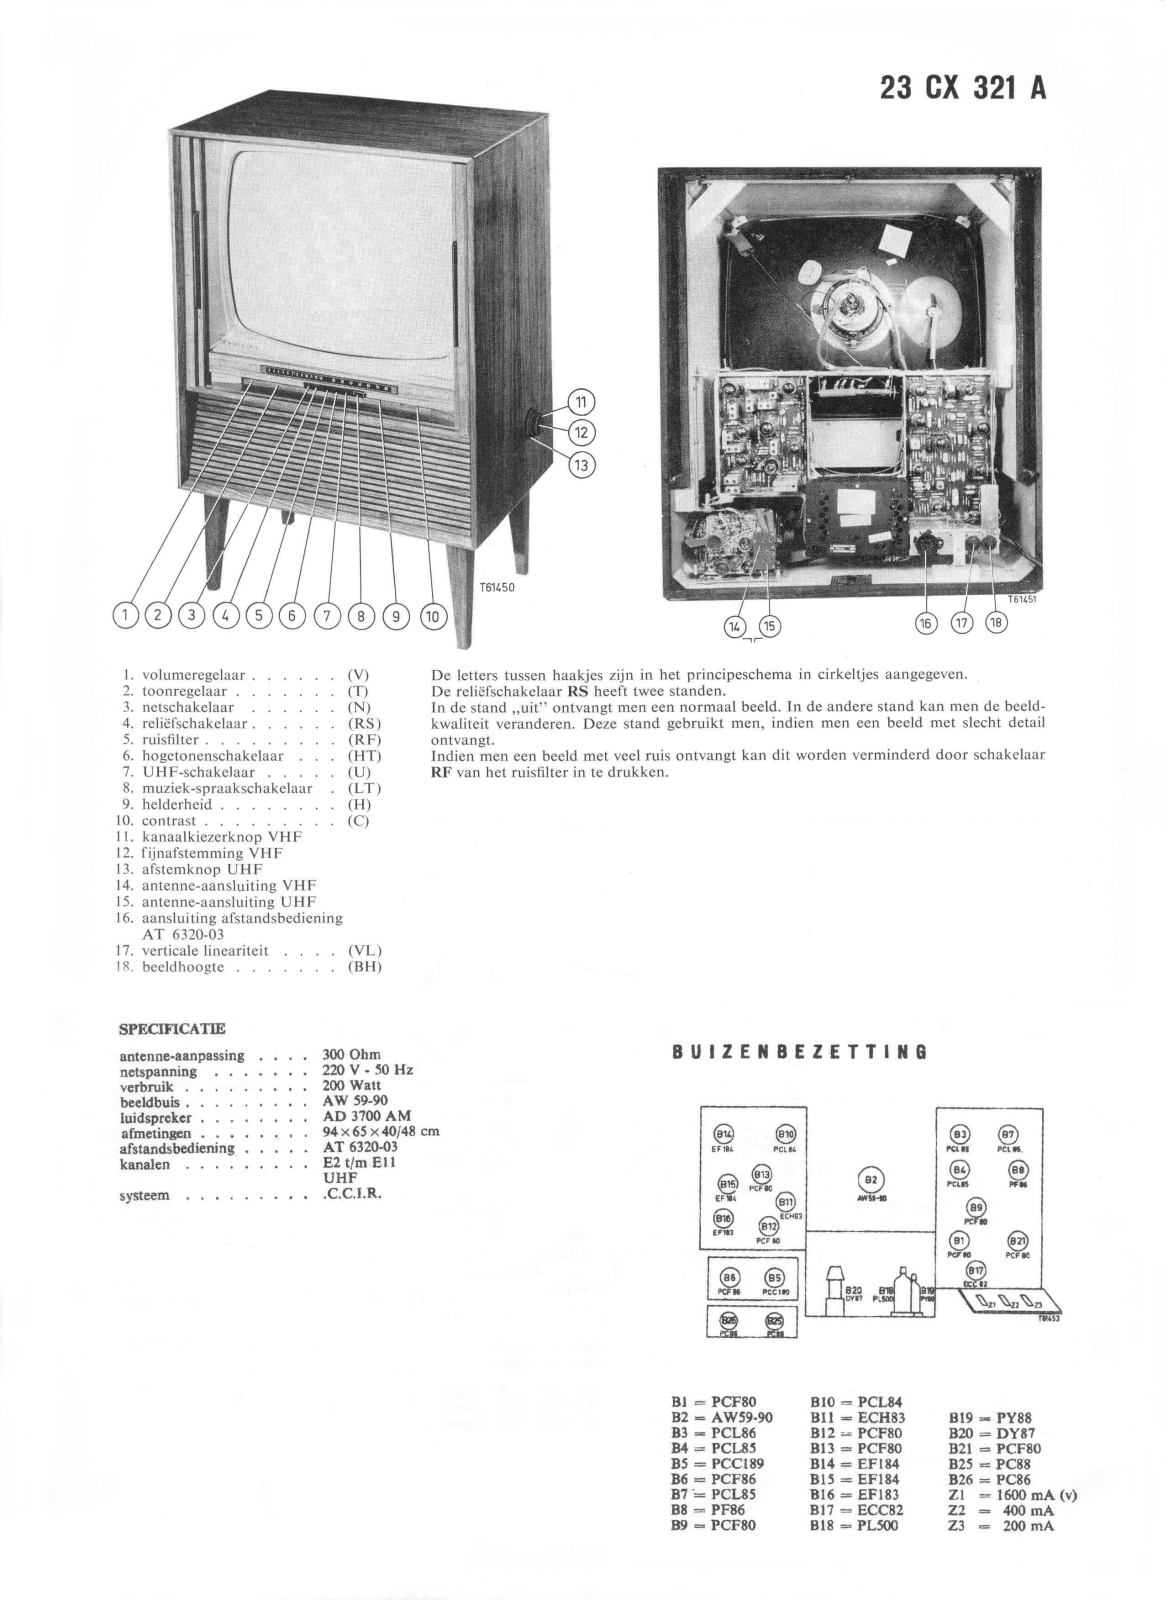 PHILIPS 23CX321A Service Manual